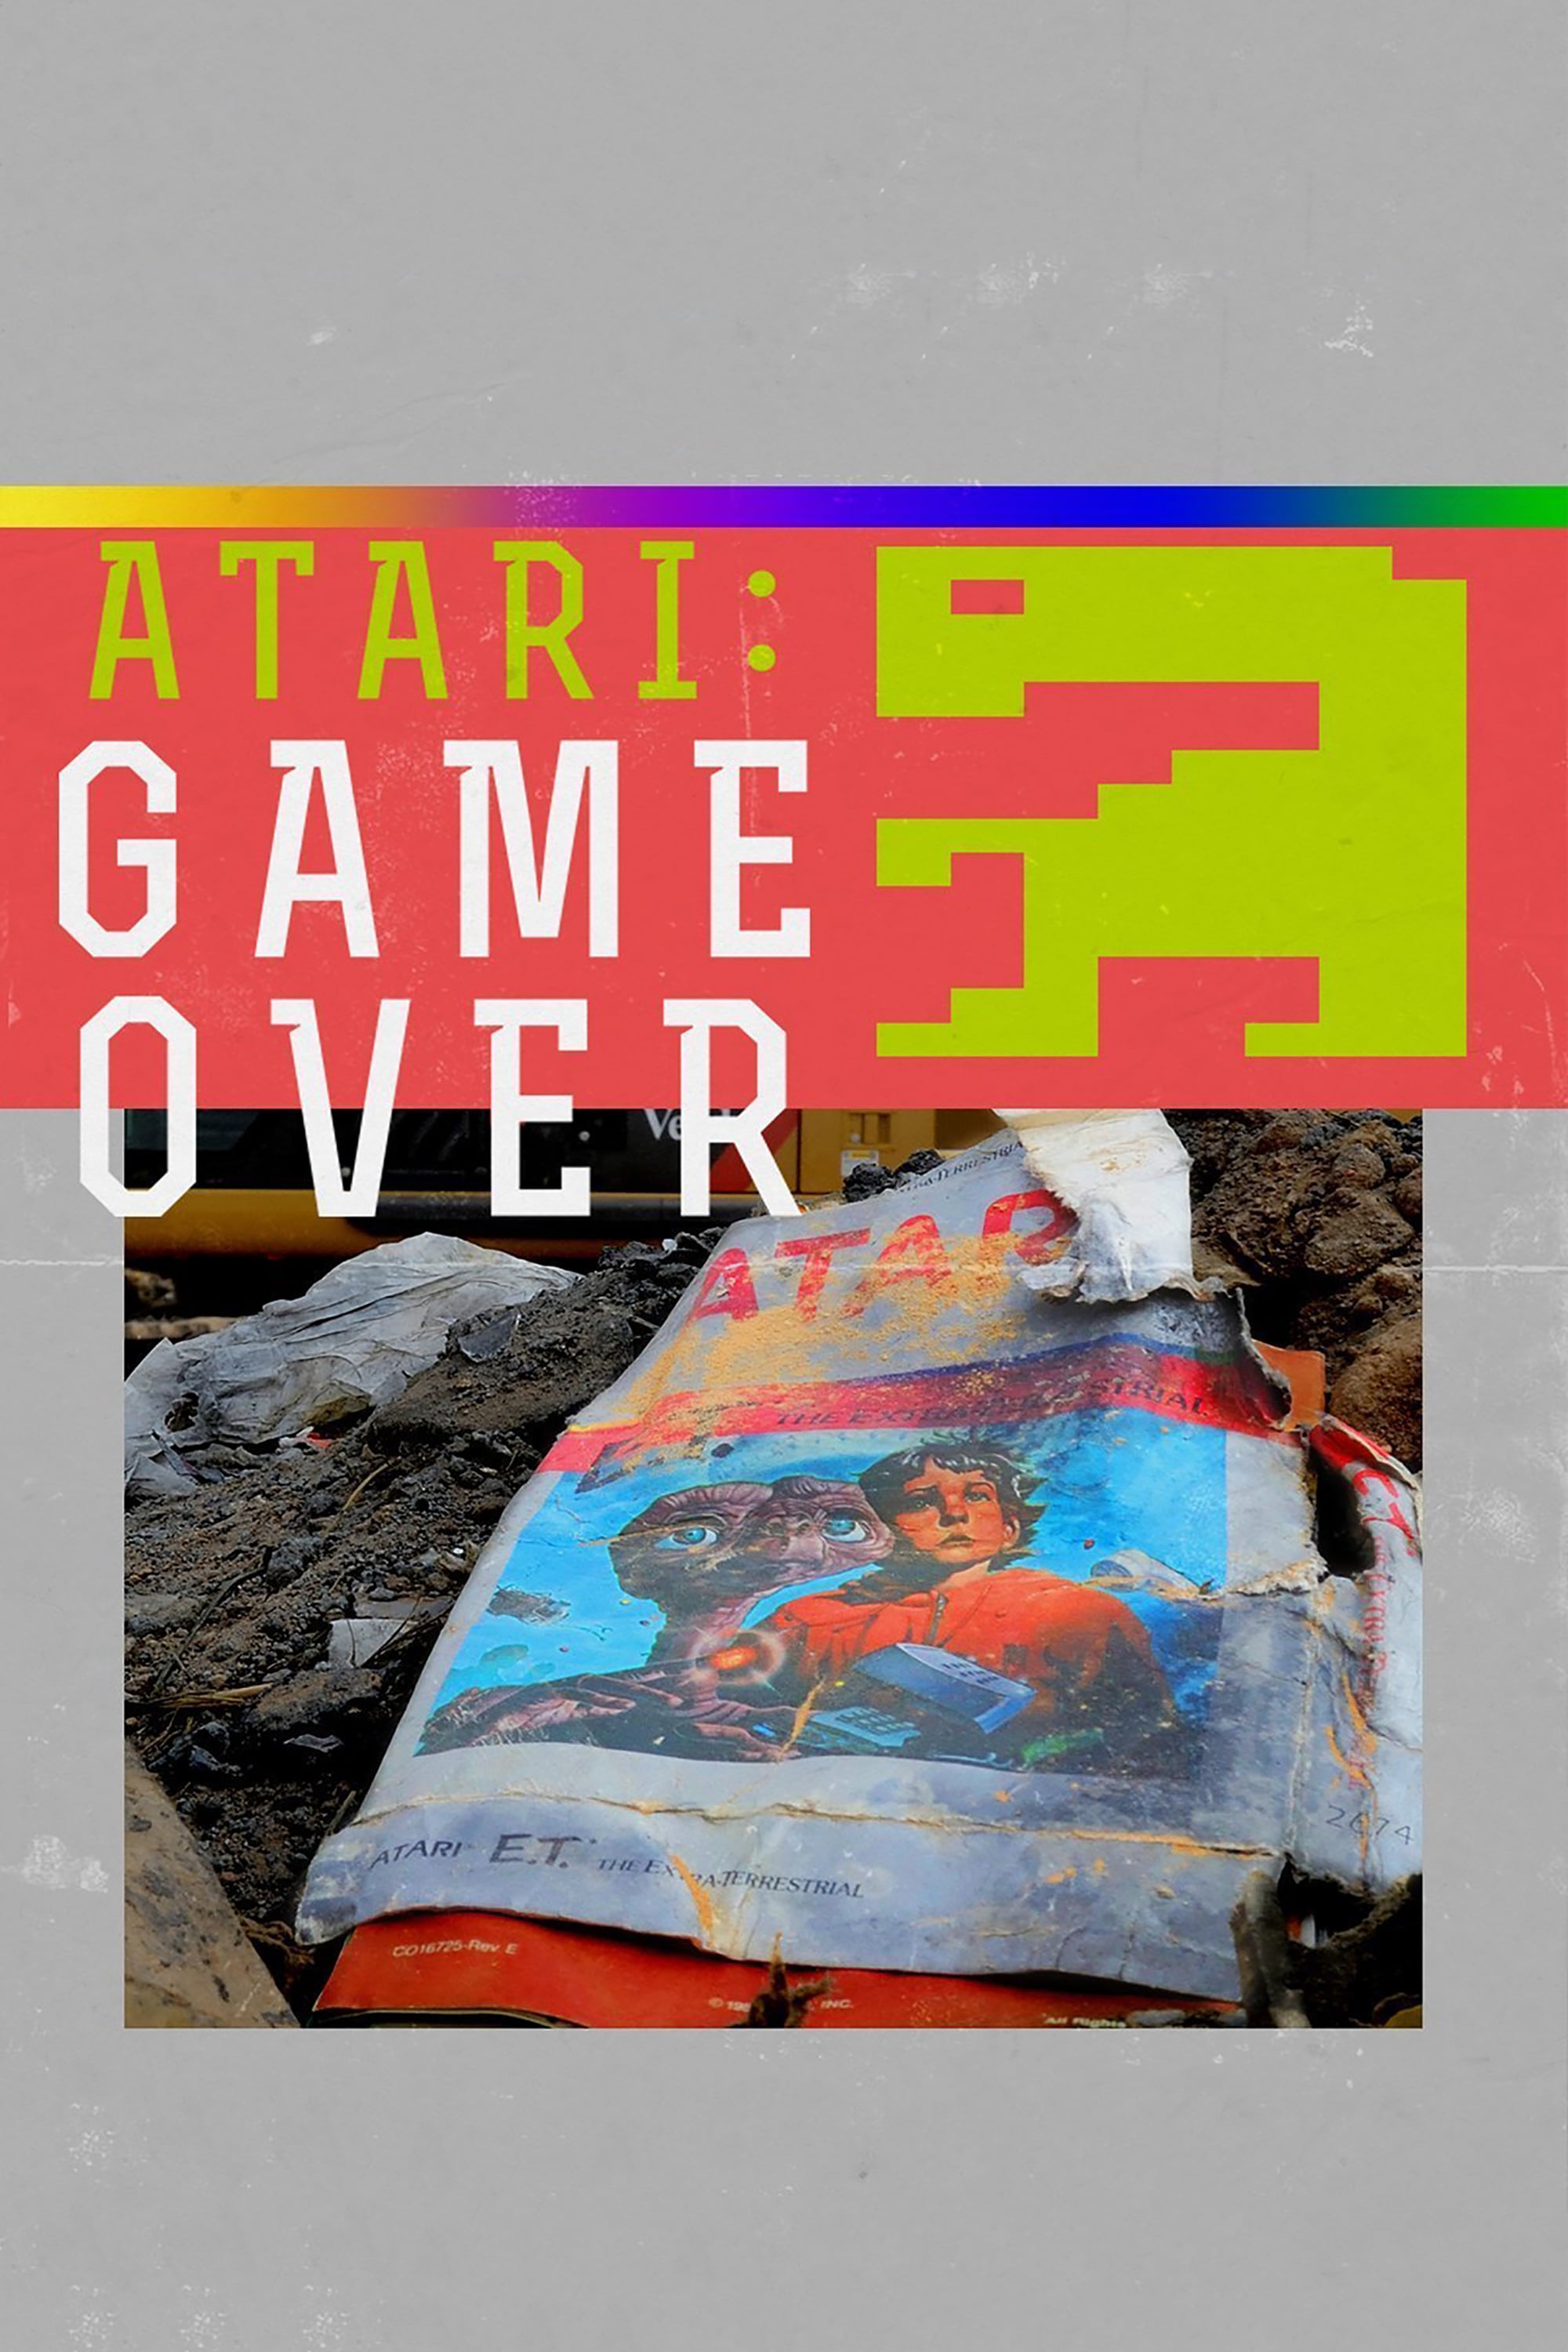 Caratula de ATARI: GAME OVER (Atari: Game over) 